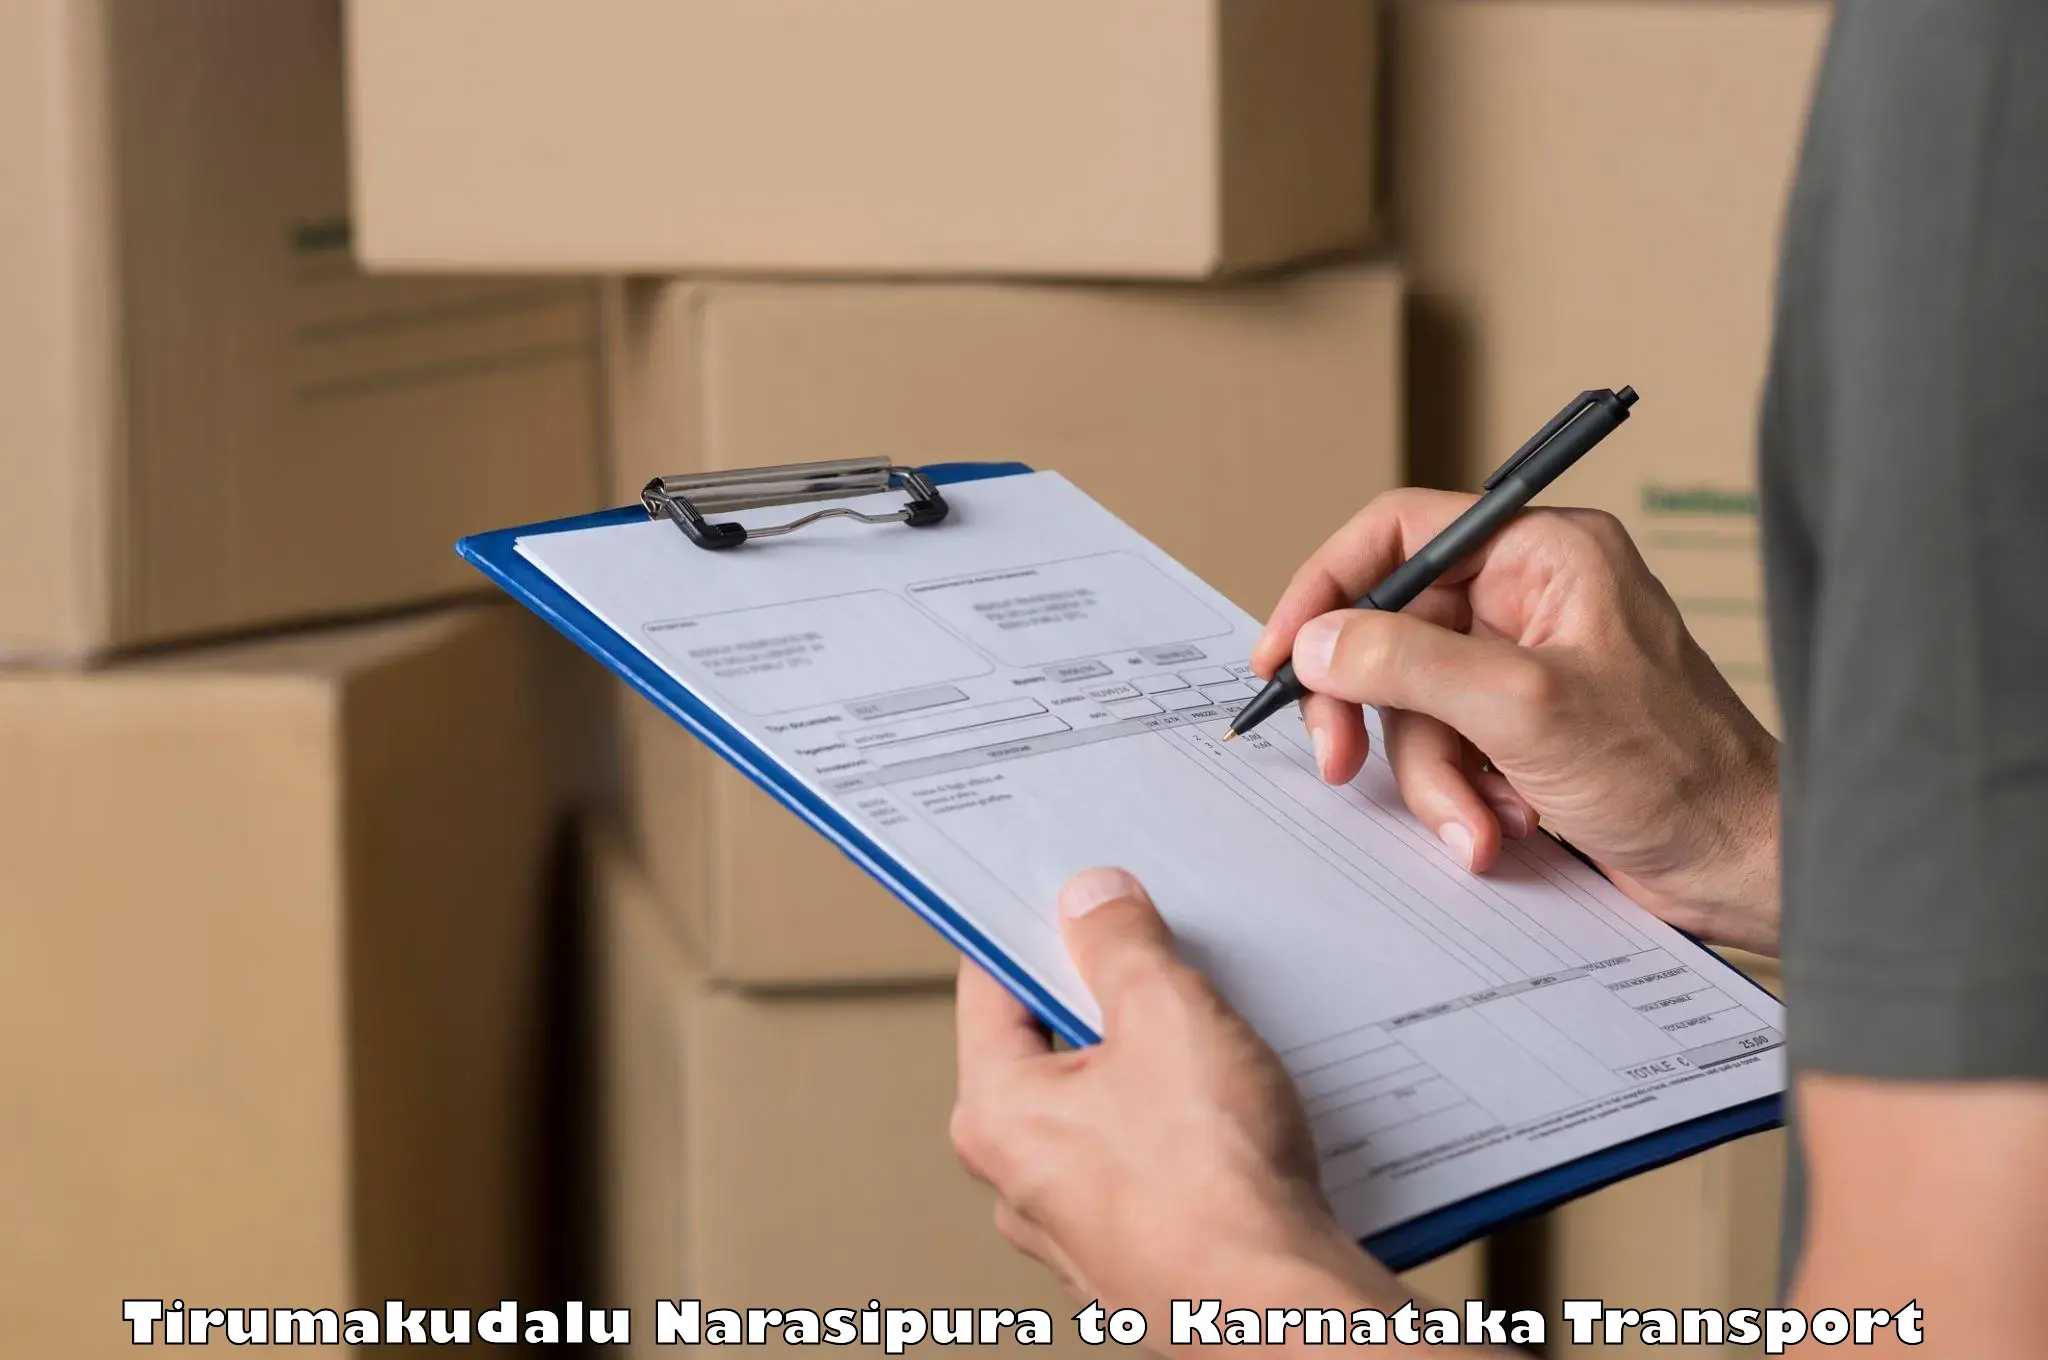 Goods delivery service Tirumakudalu Narasipura to Karnataka